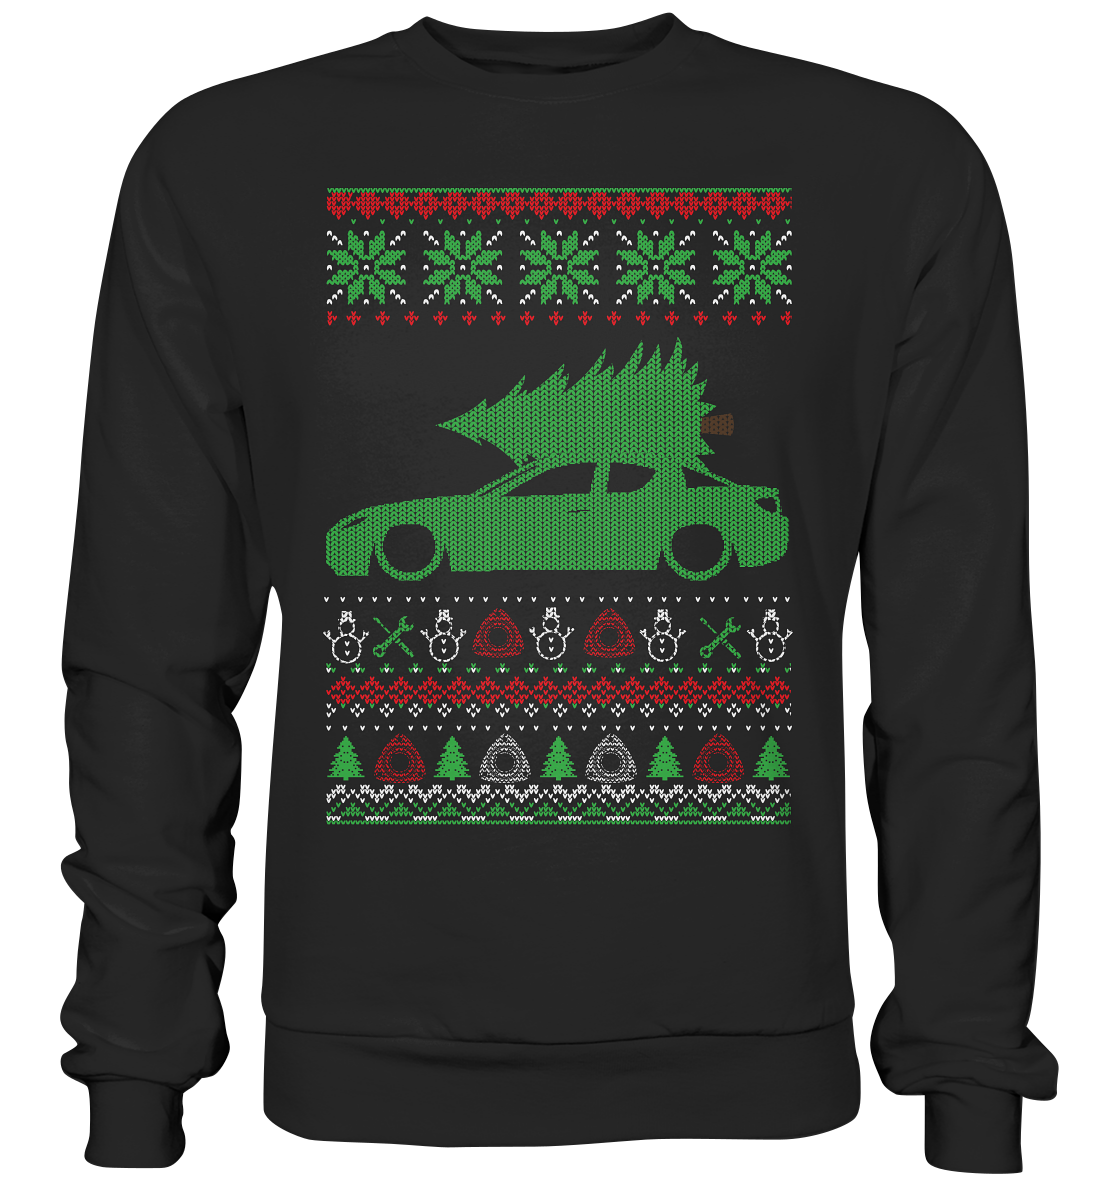 CODUGLY_MGKRX8 - Premium Sweatshirt